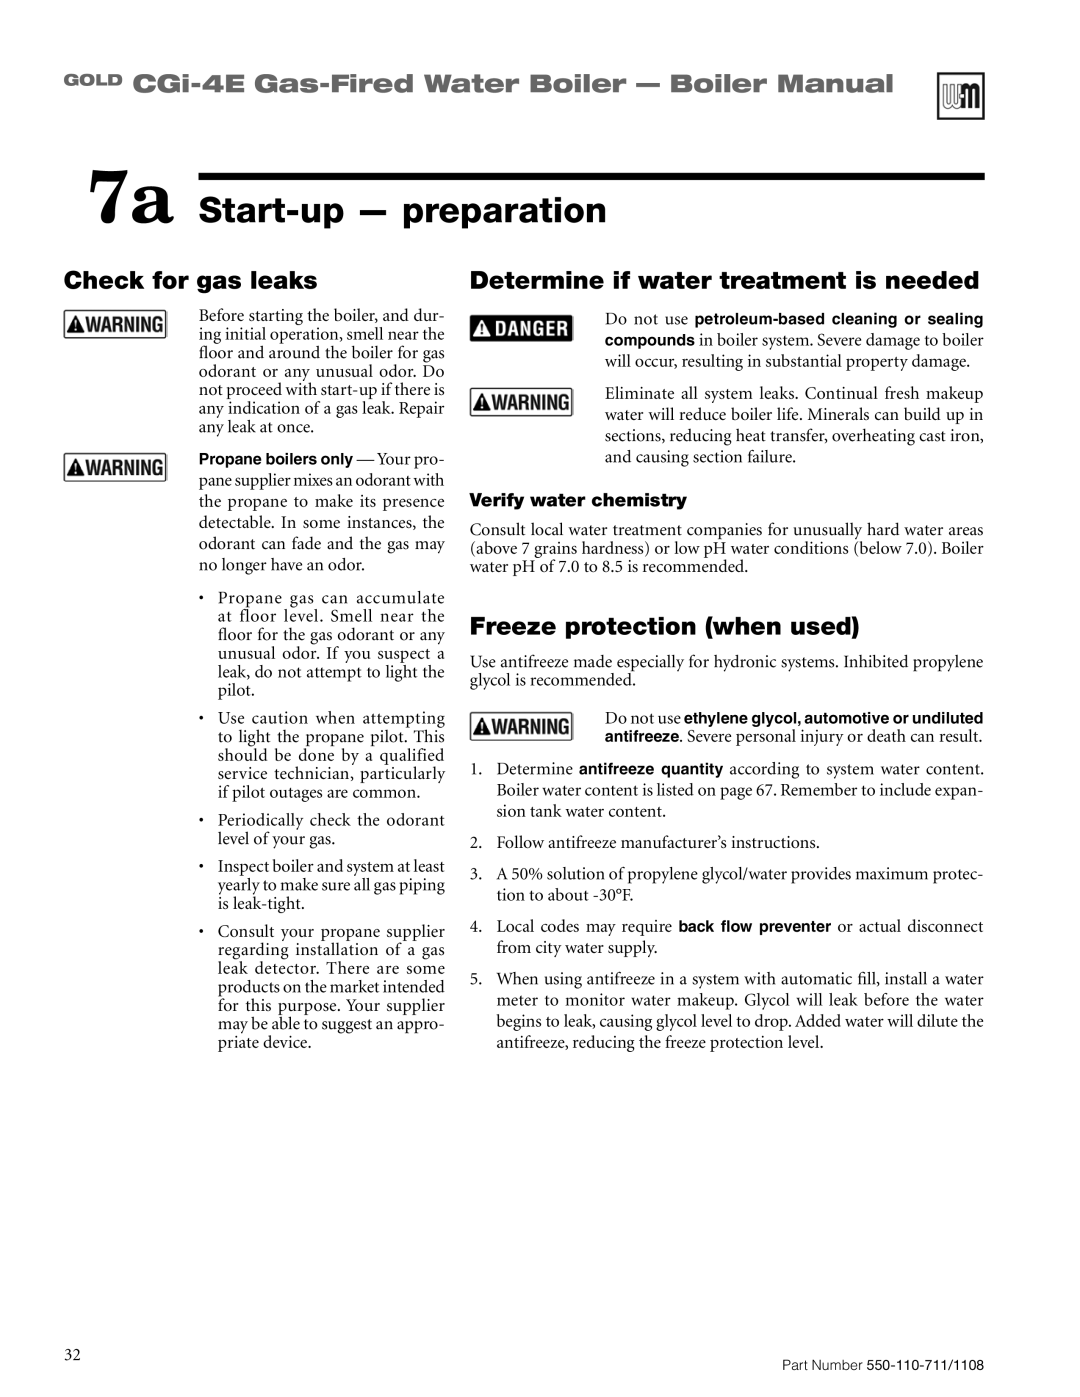 Weil-McLain CGI-4E manual 7a Start-up- preparation, GOLD CGi-4E Gas-FiredWater Boiler - Boiler Manual, Check for gas leaks 